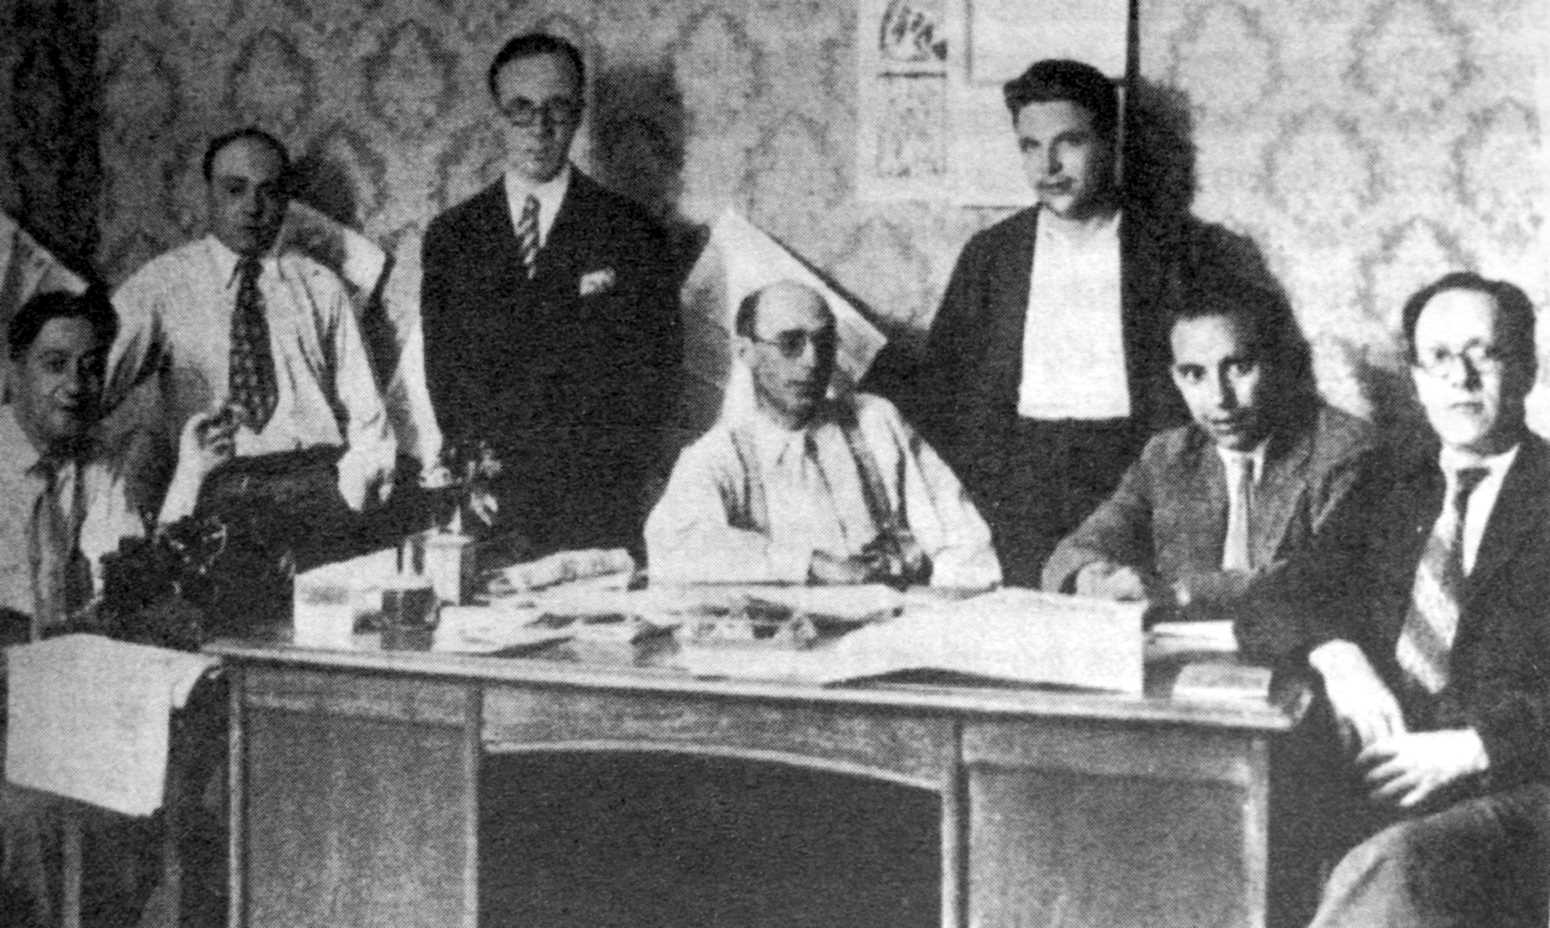 Nova redacció de «Solidaridad Obrera» (1923). D'esquerra a dreta: Arturo Parera Mallí, Fernando Pintado, Muñoz, Liberto Callejas, Manuel Ribas, Vicente Galindo Cortés («Fontaura») i Miguel Terrén Mañero